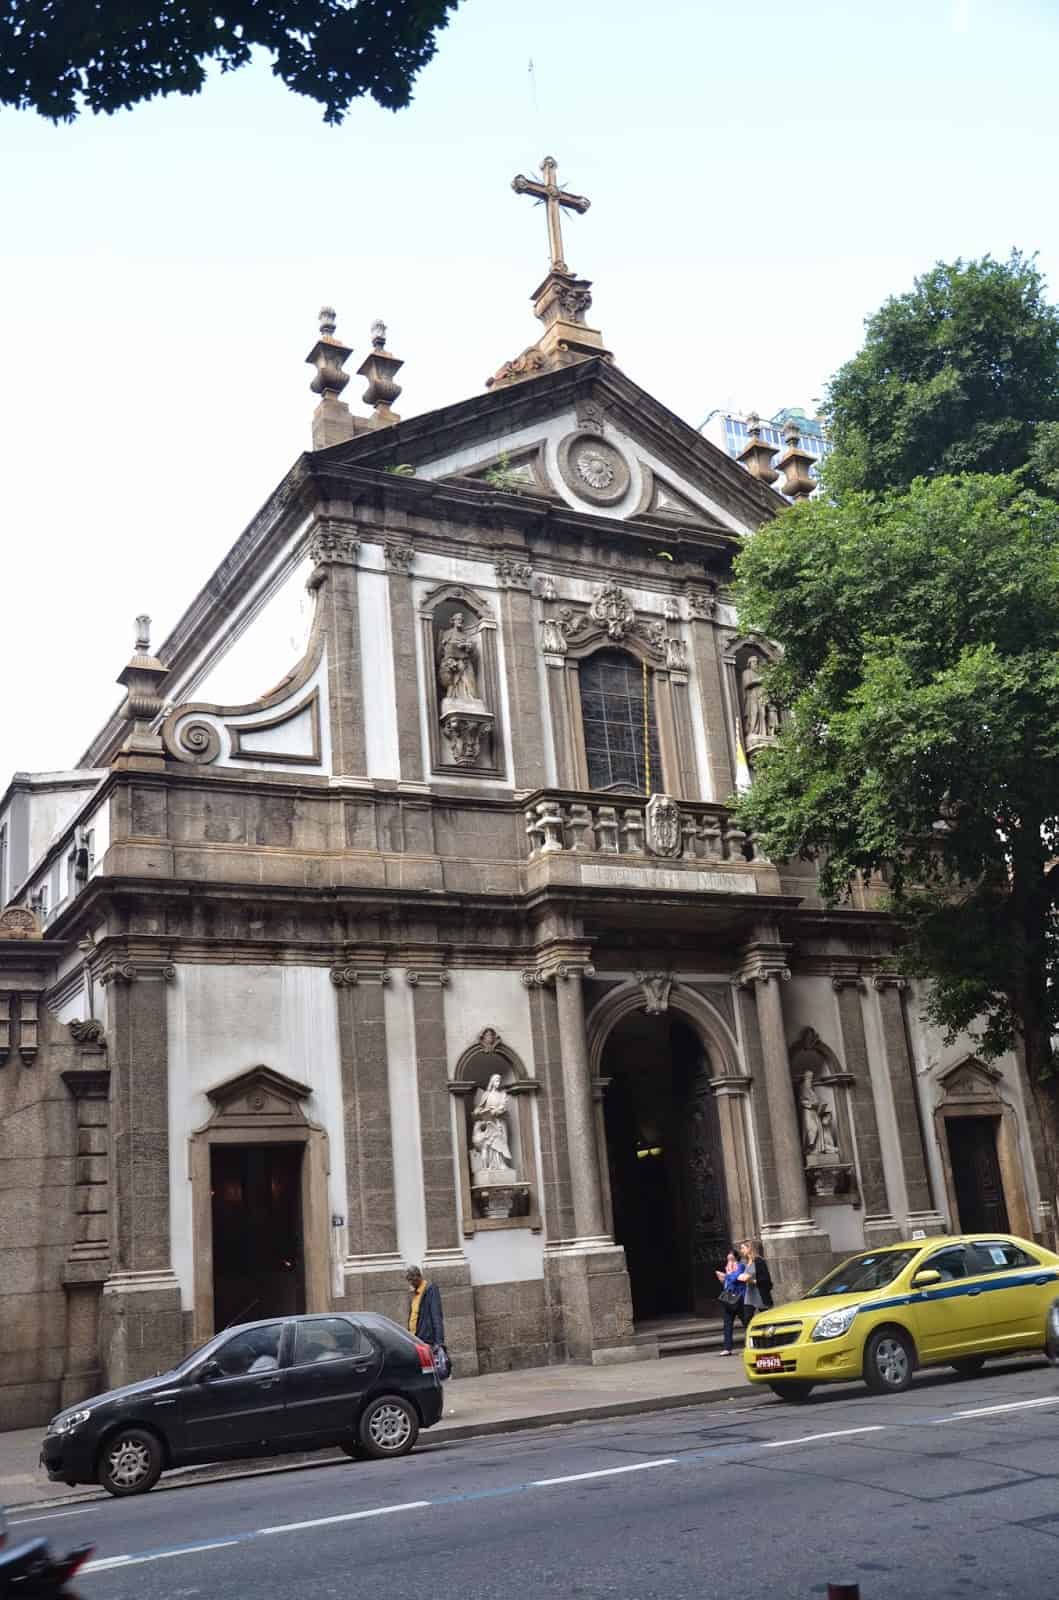 Igreja Santa Cruz dos Militares in Rio de Janeiro, Brazil